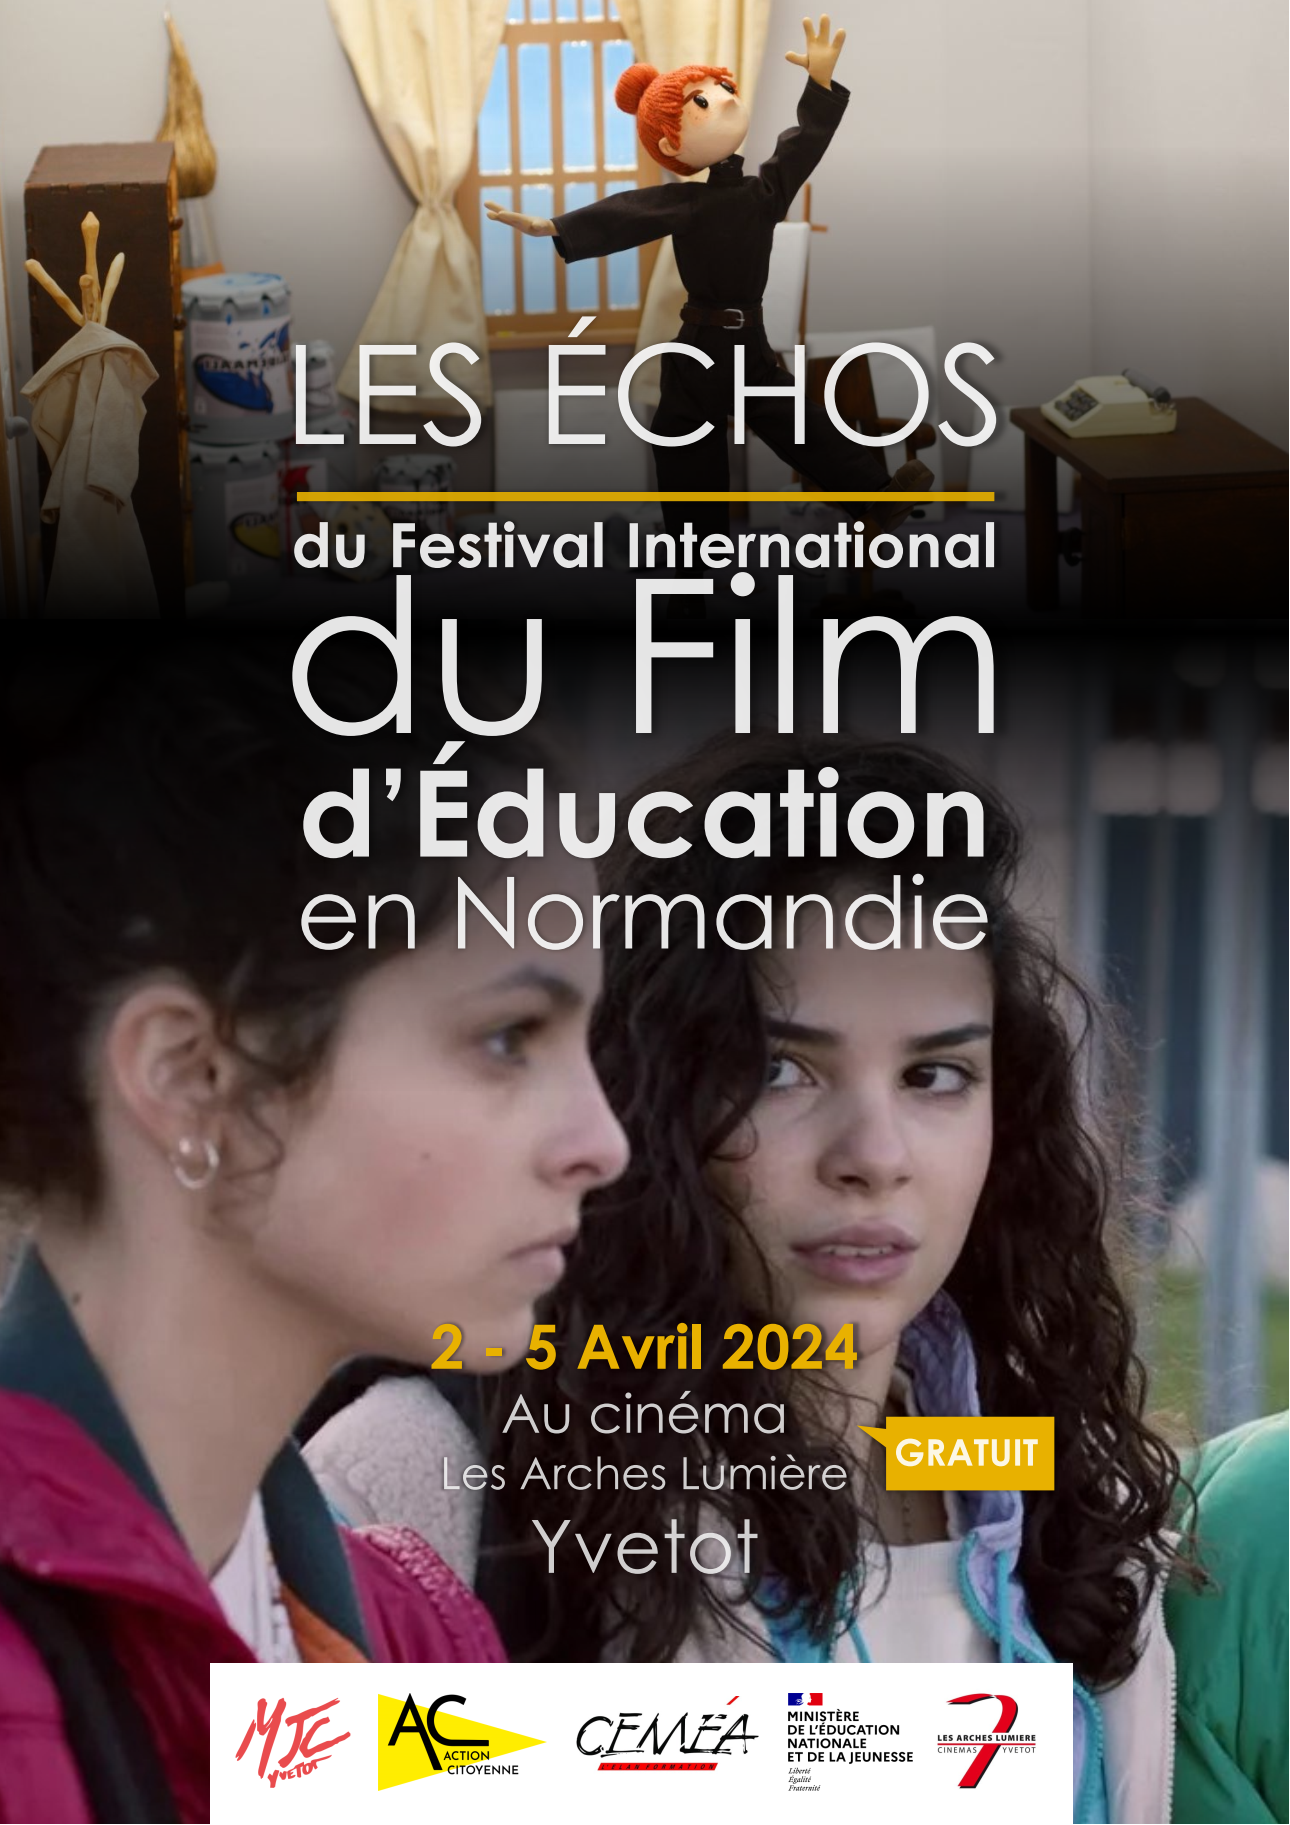 Les Echos du Festival International du Film d’Education (FIFE)